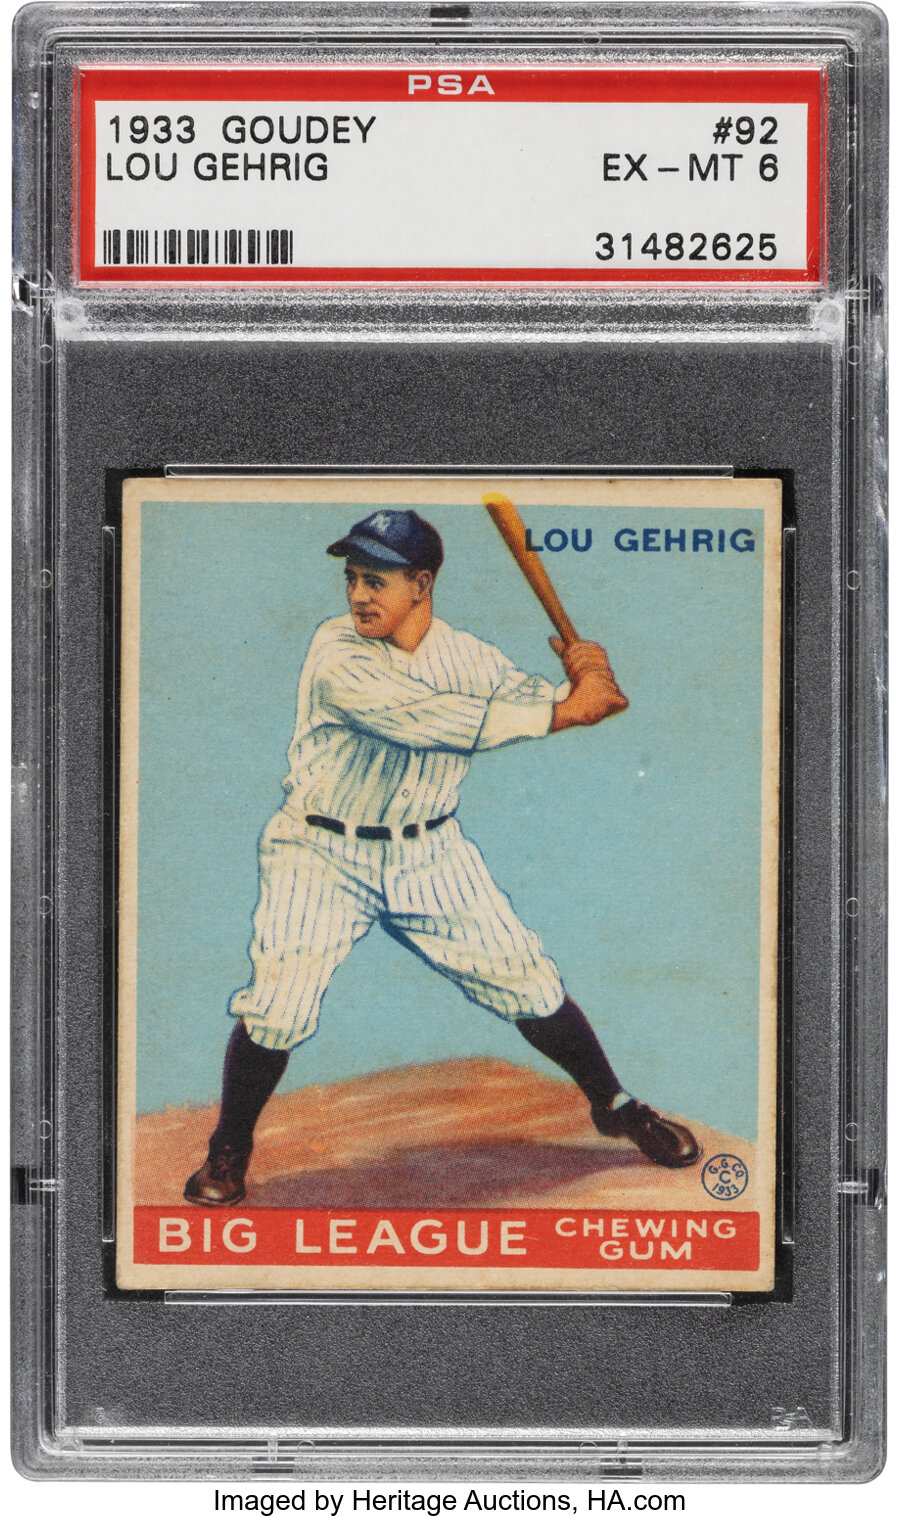 1933 Goudey Lou Gehrig Rookie #92 PSA EX-MT 6